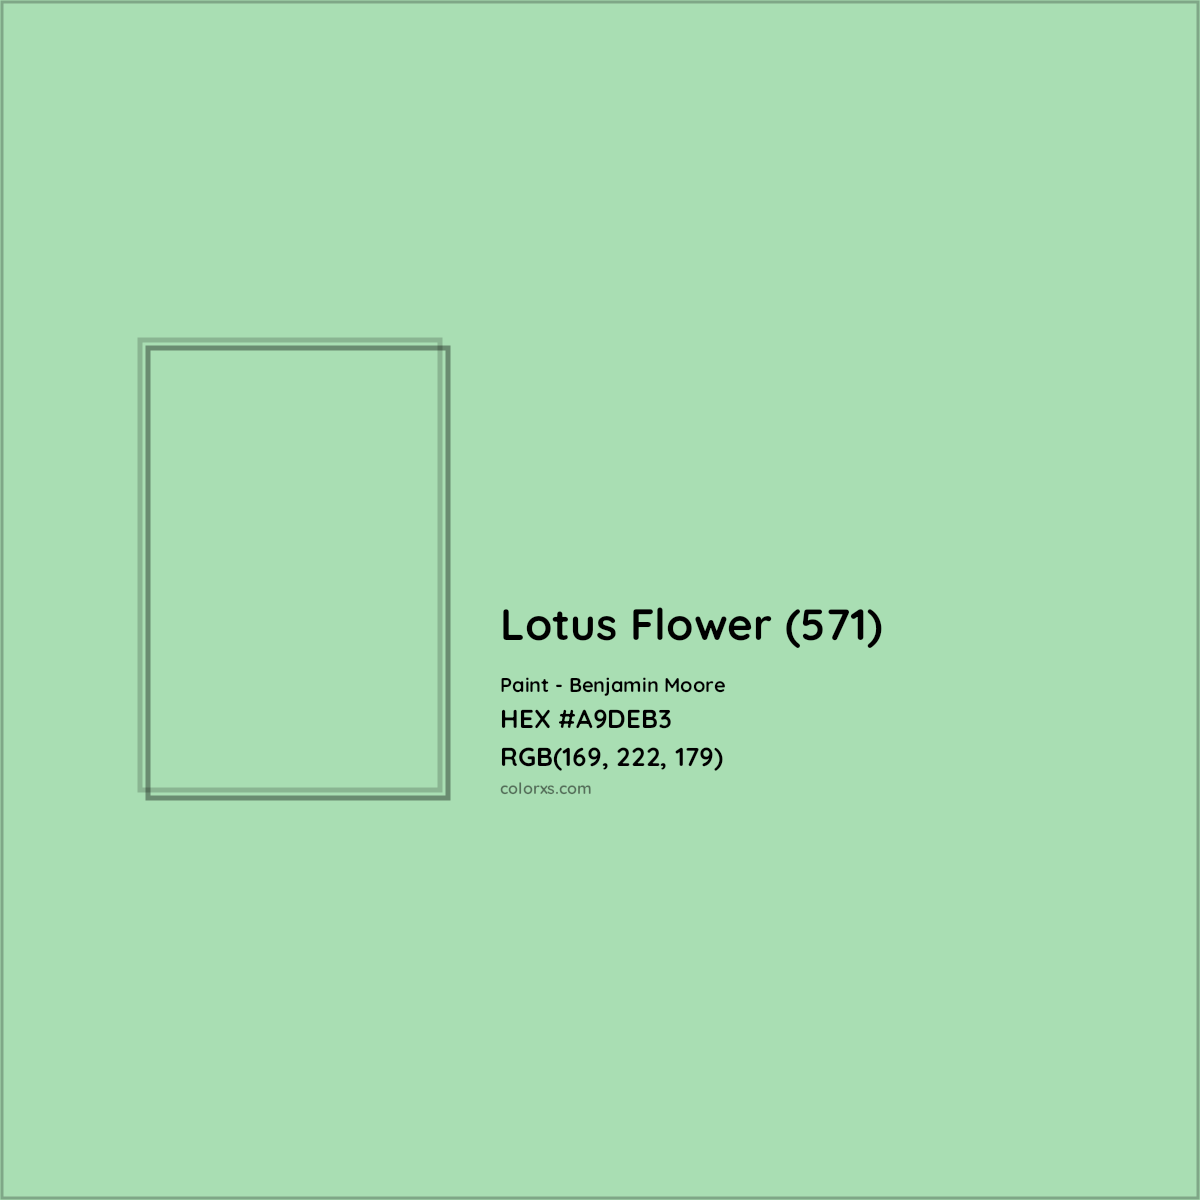 HEX #A9DEB3 Lotus Flower (571) Paint Benjamin Moore - Color Code